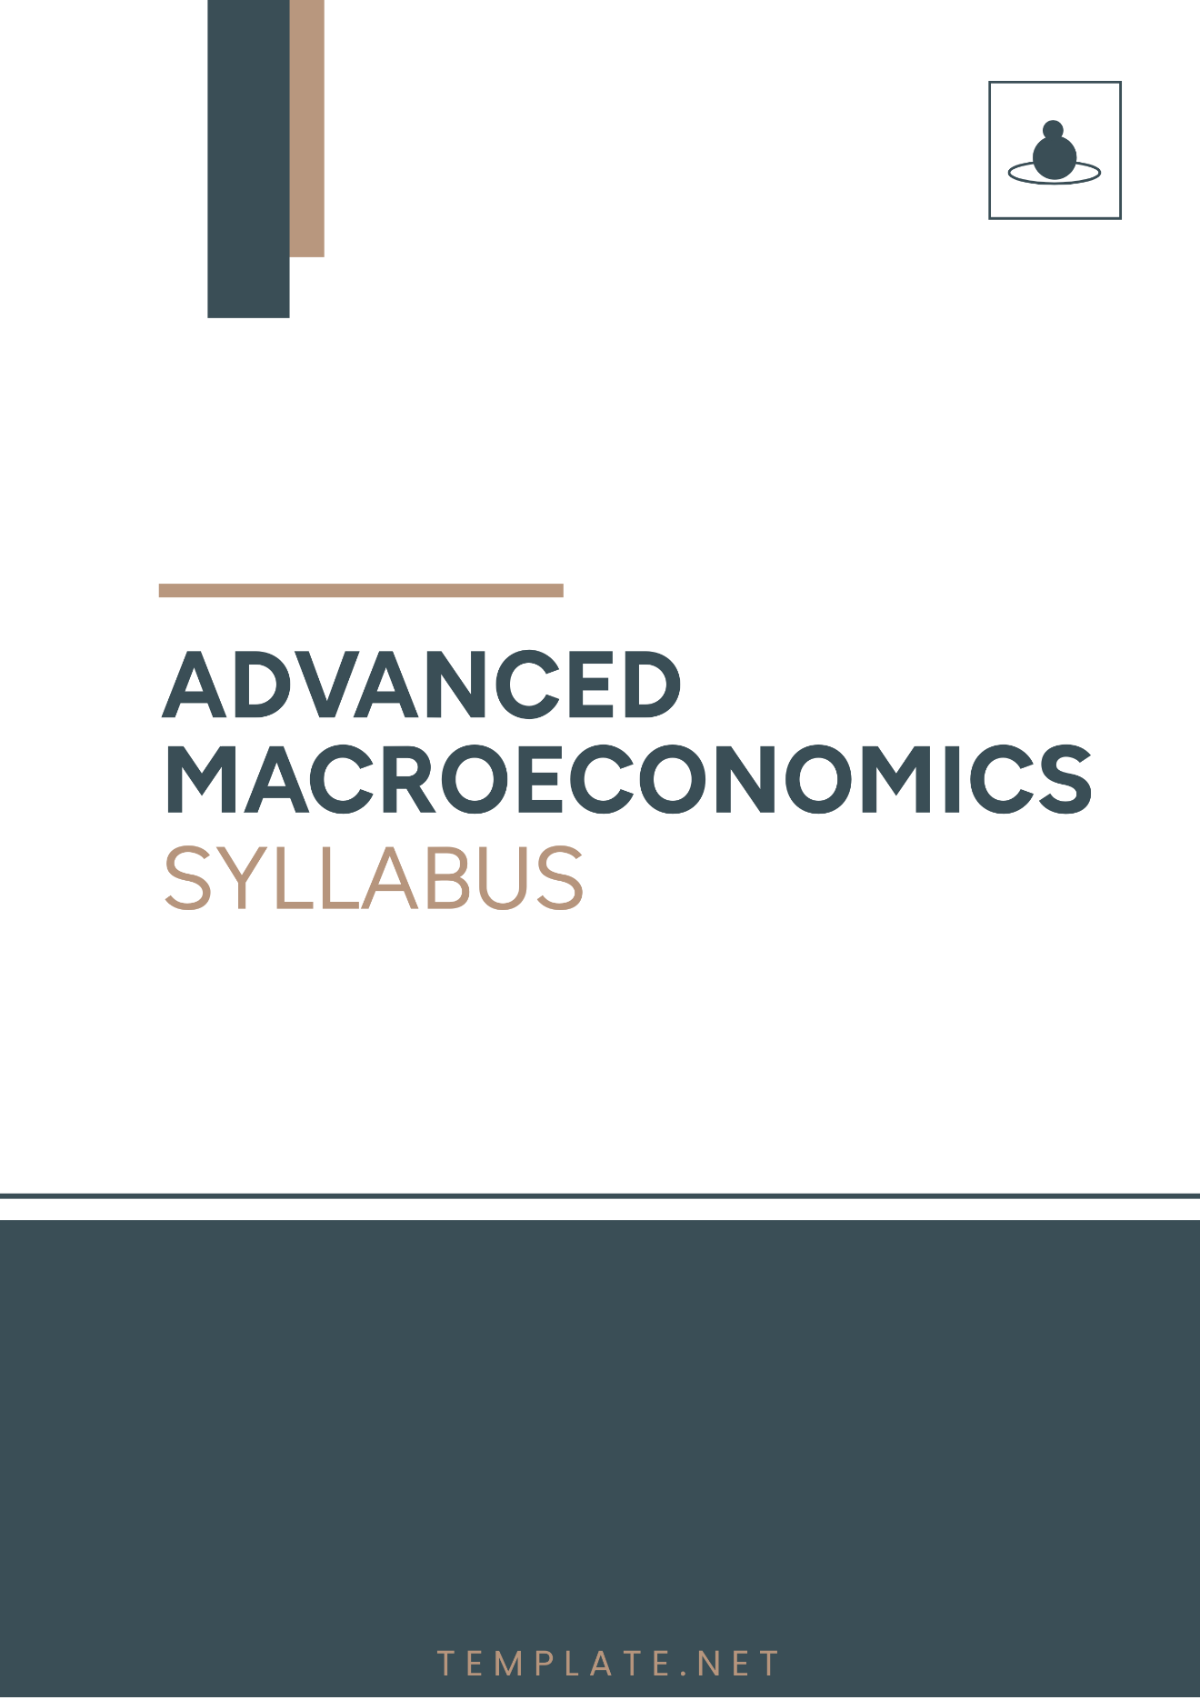 Advanced Macroeconomics Syllabus Template